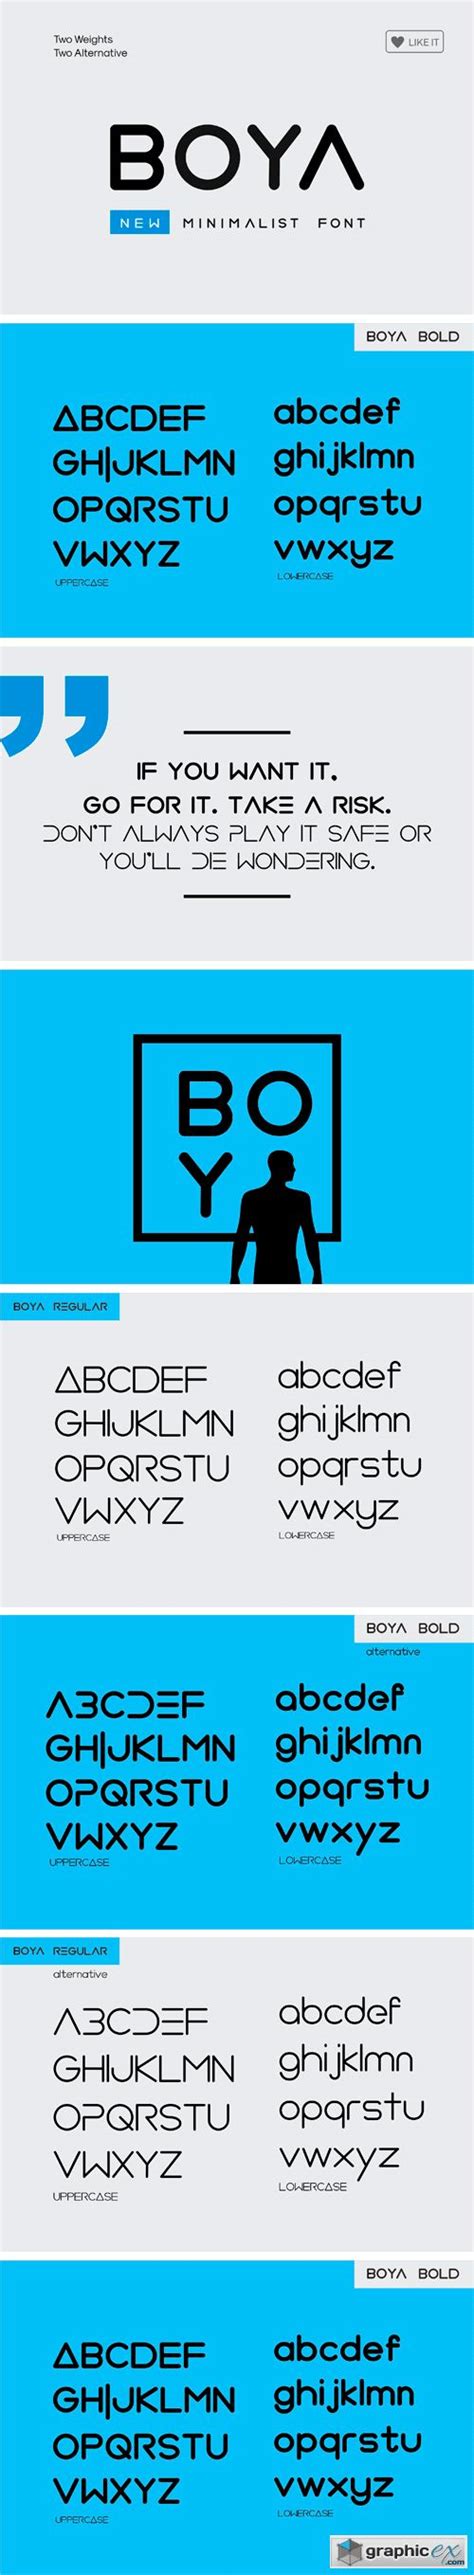 Boya Rounded Font 2316709new Minimalism Rounded Typeface Its Perfect